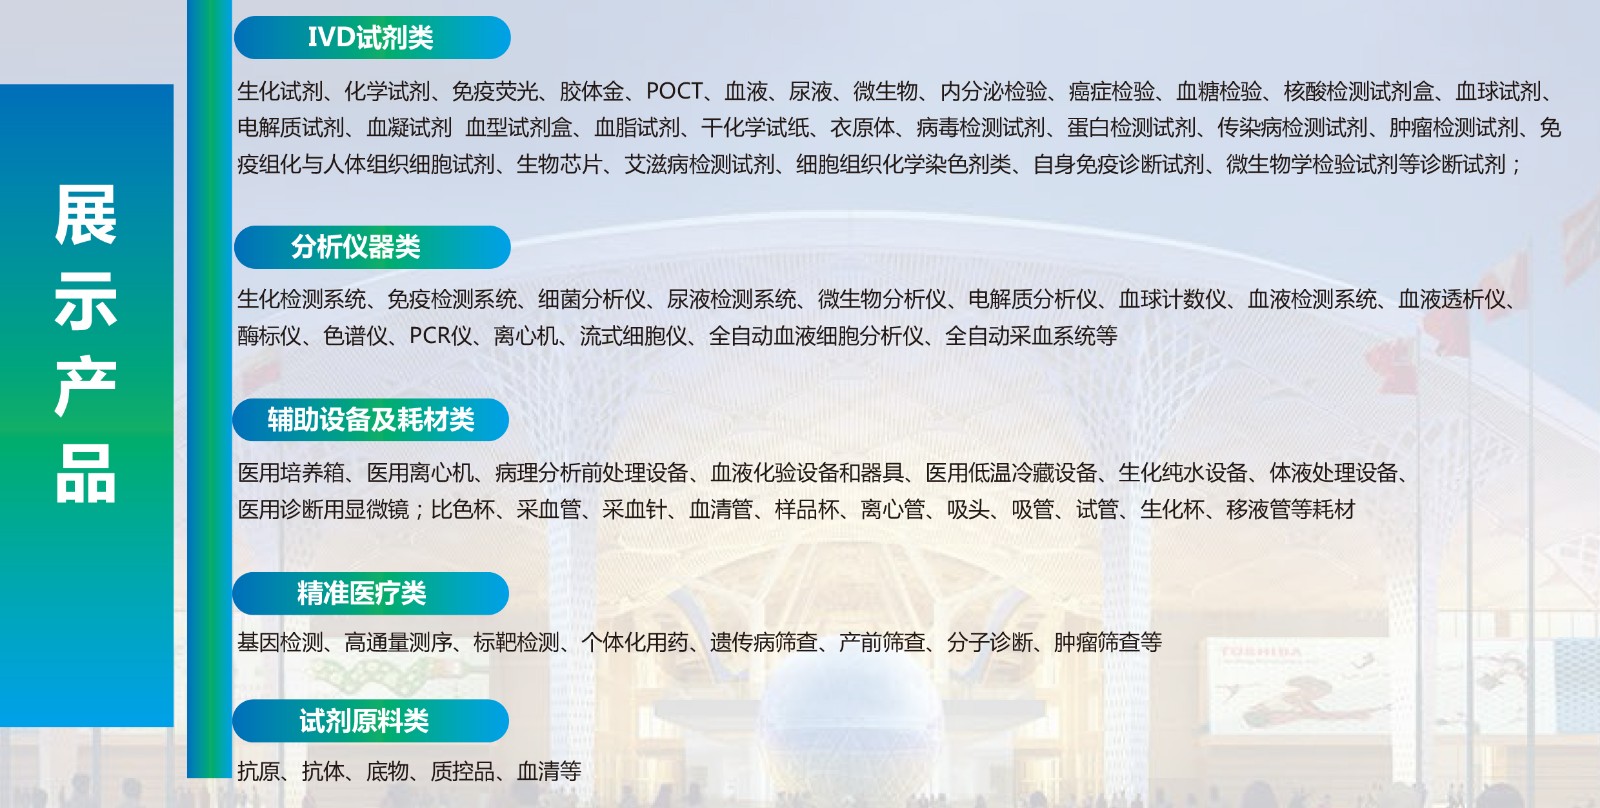 CEIVD 2022上海检验医学及IVD展-参展范围